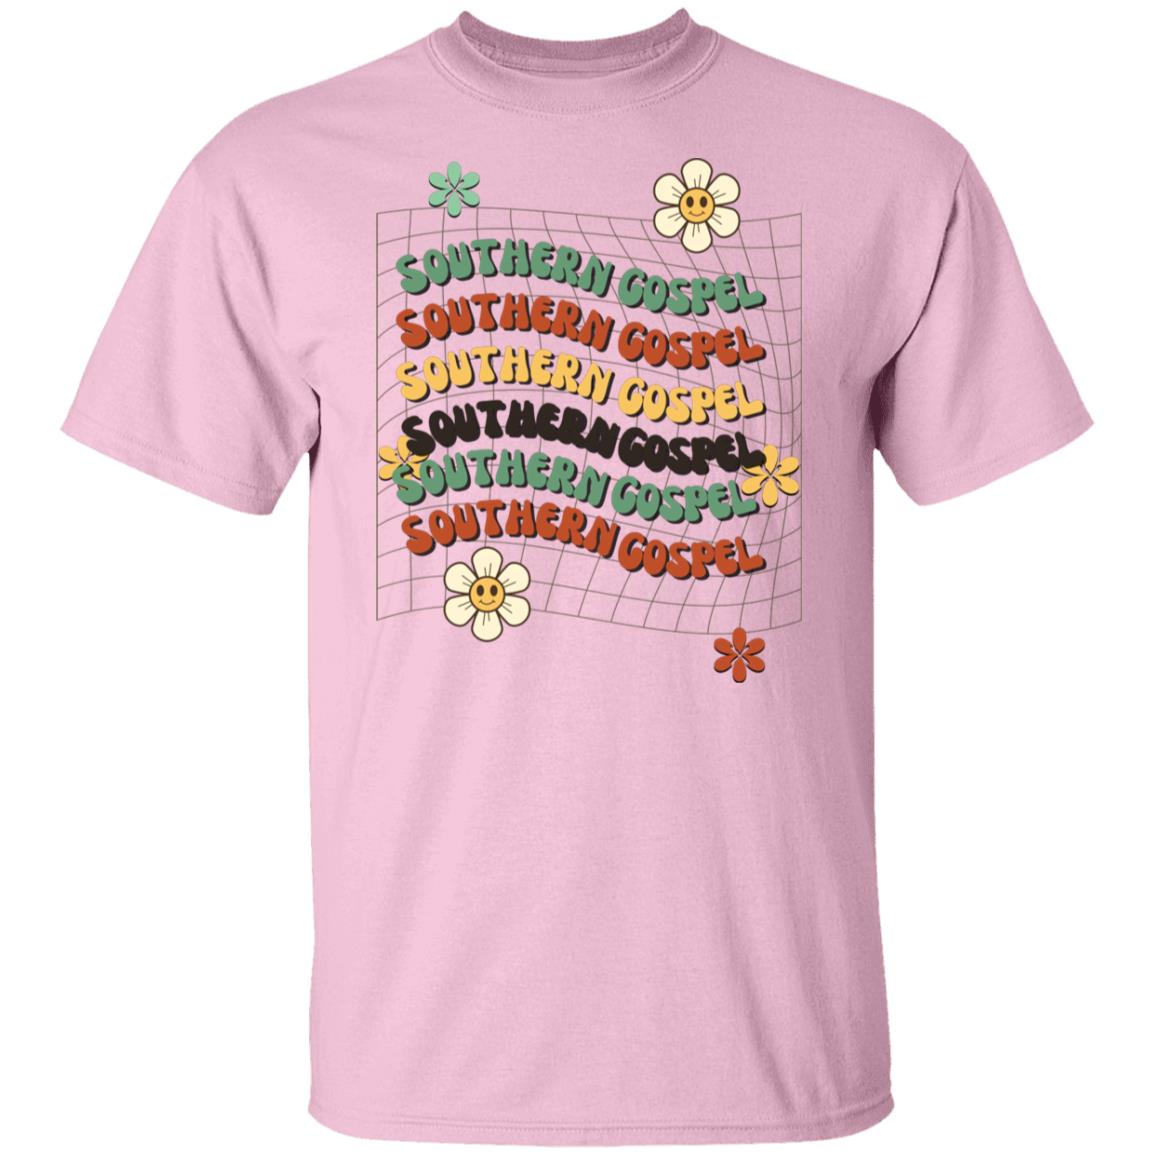 Southern Gospel - Southern Gospel T-Shirt